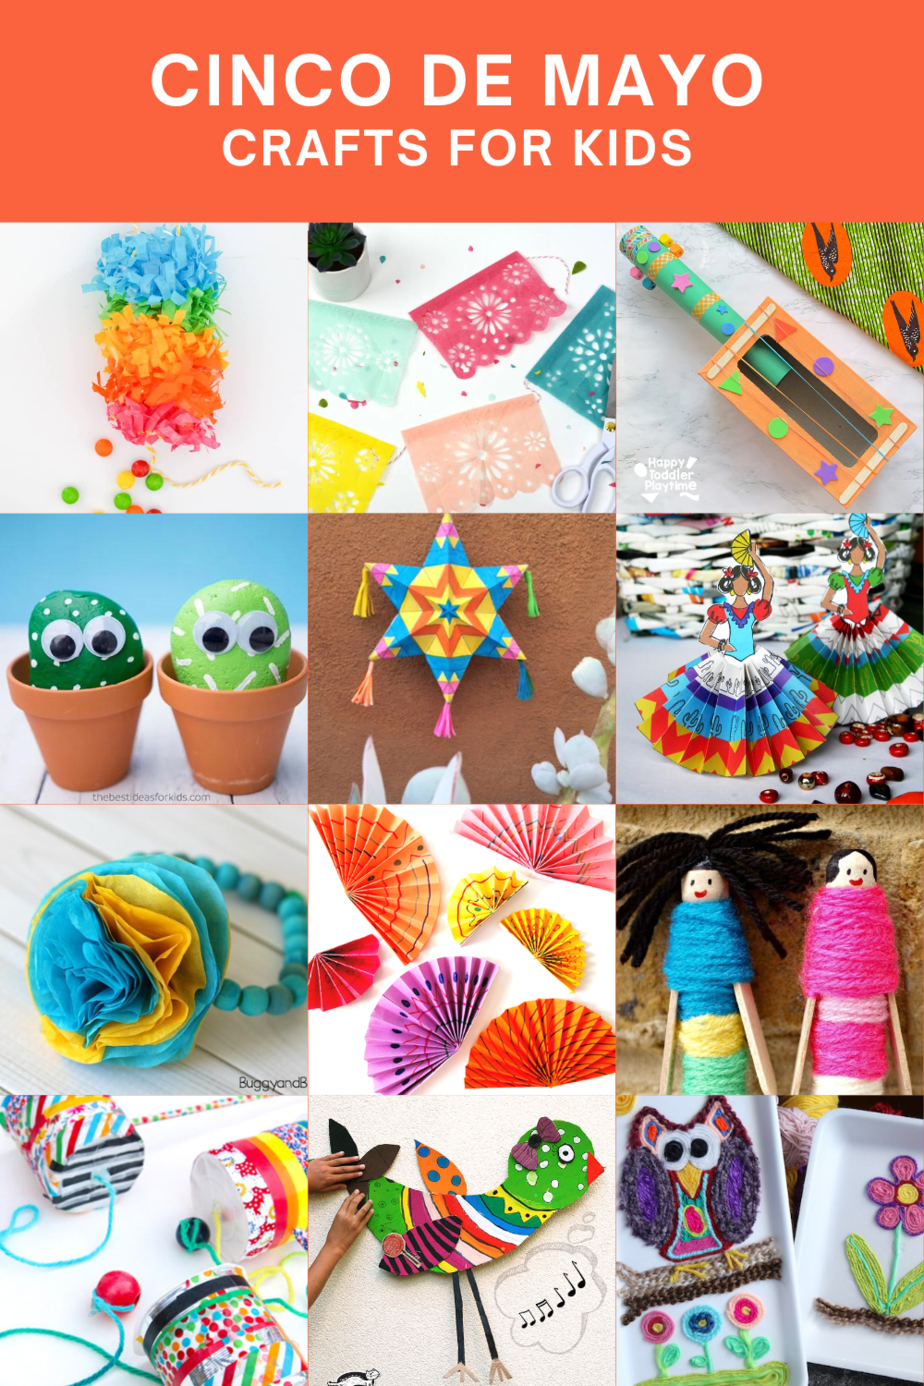 🌵✨ Let's fiesta like there's no mañana! 🎉🎨 Dive into Cinco de Mayo crafts for kids - colorful papel picado, festive piñatas, and more! 💃🎉